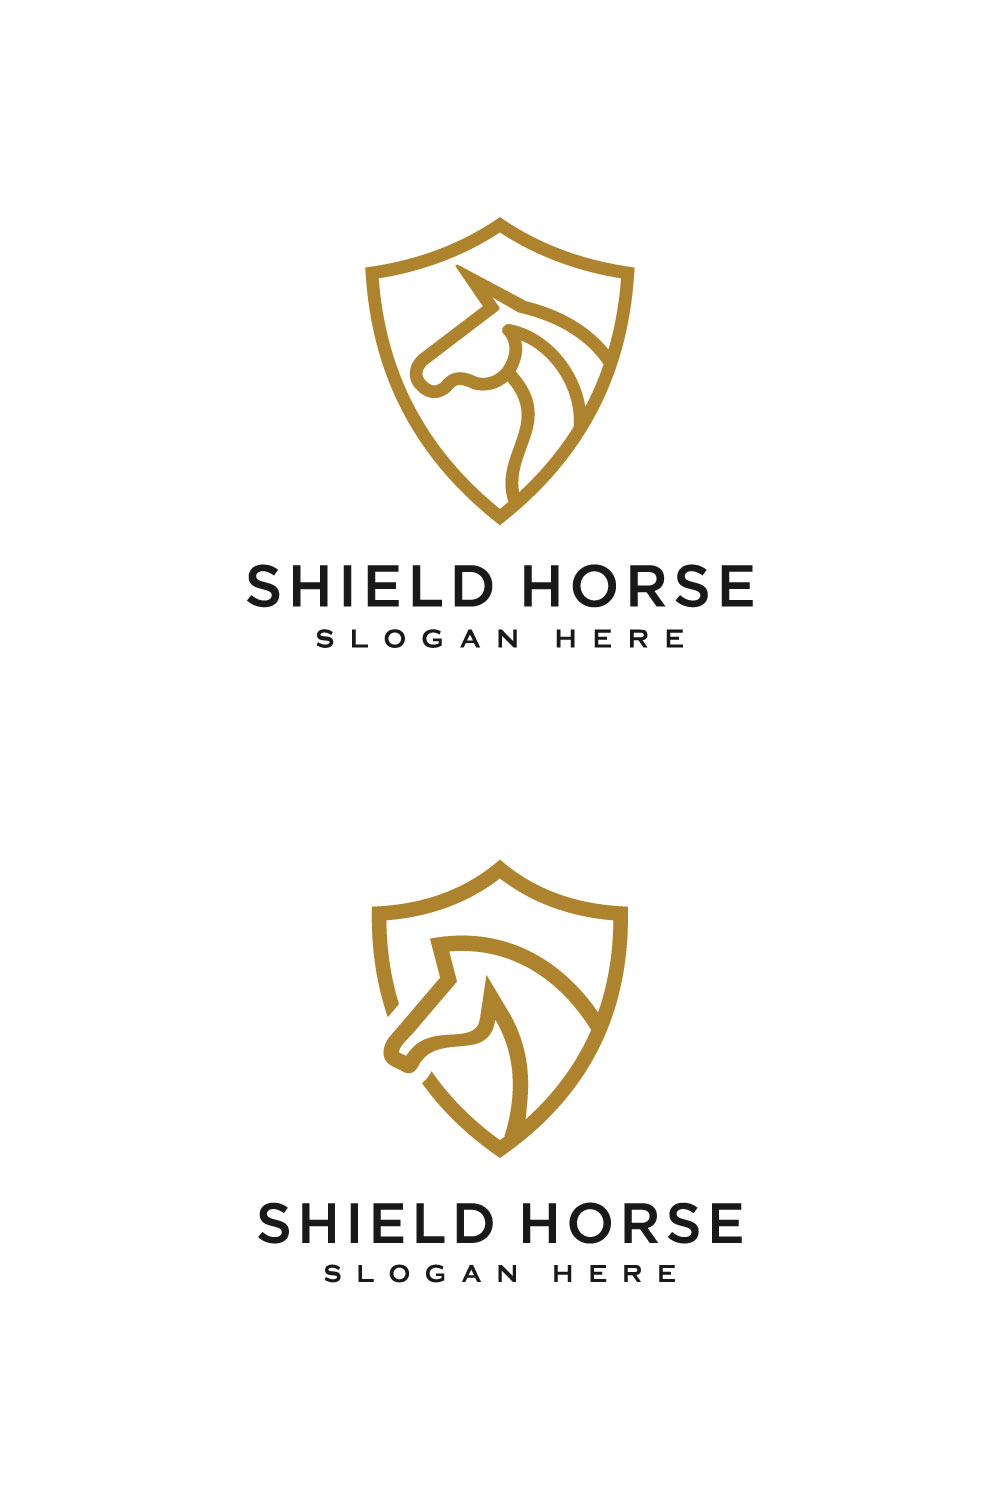 2 Head Horse And Shield Logo Vector Pinterest Image.